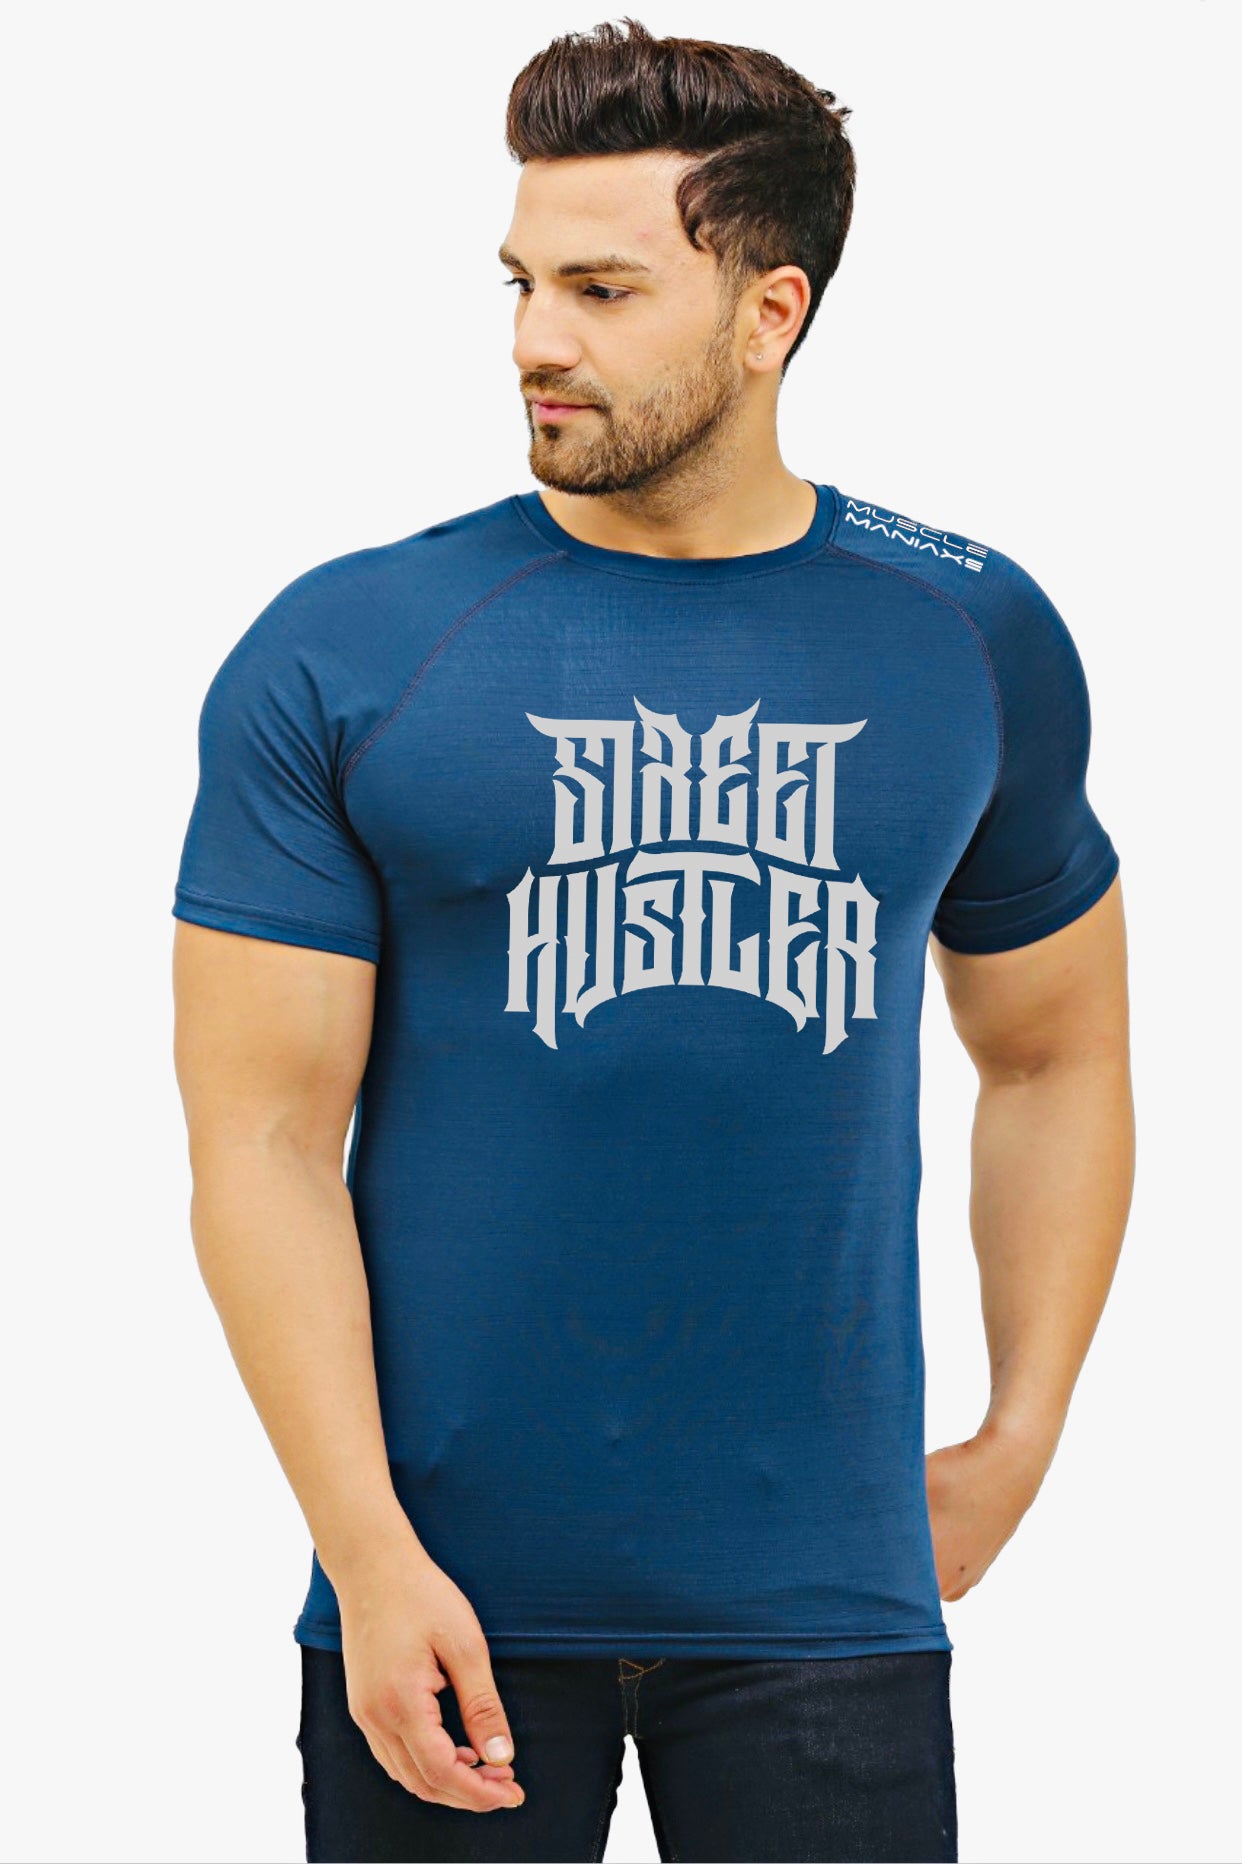 ACTIVE MISTIC BLUE short sleeve tshirt STREET HUSTLER